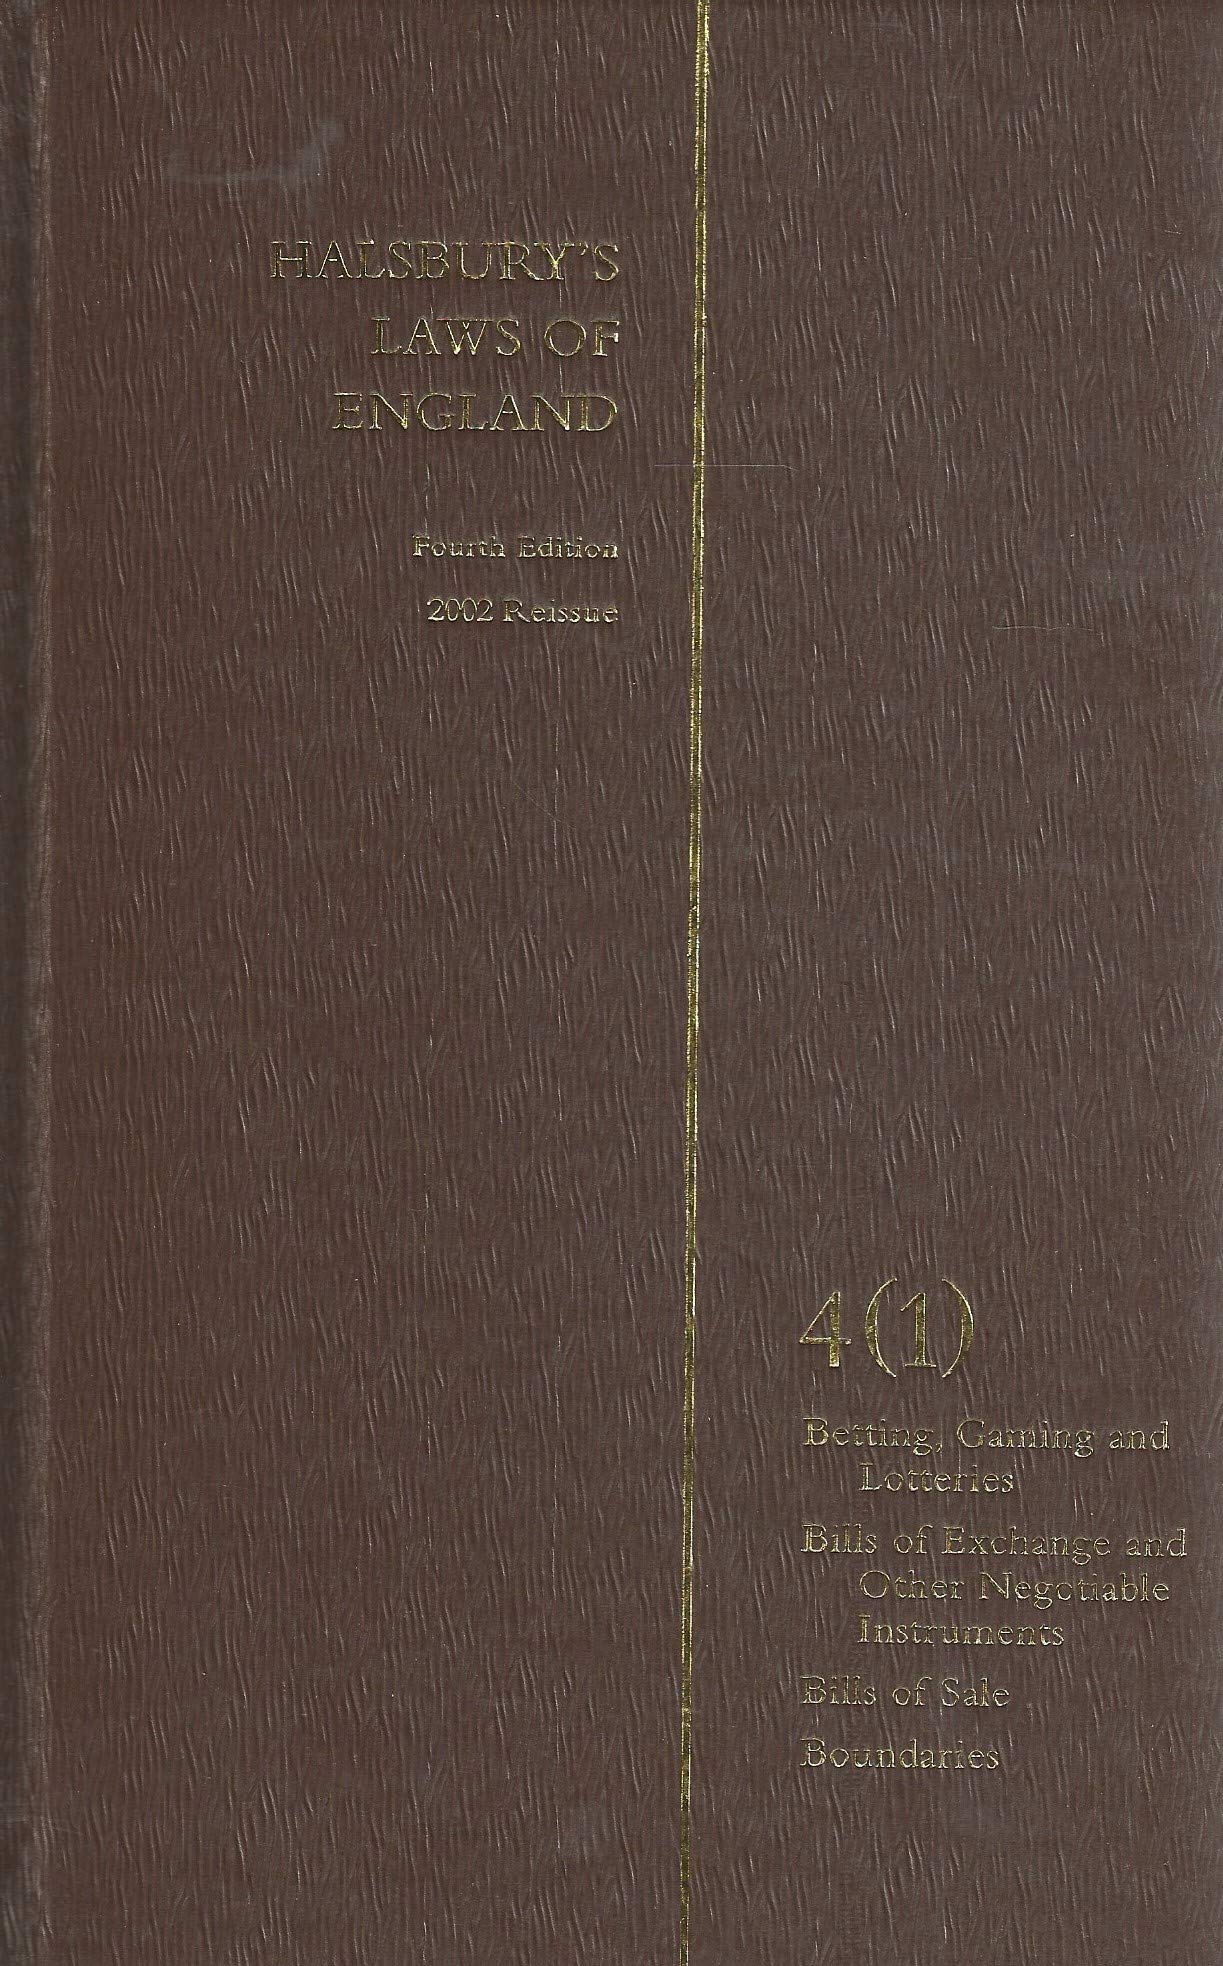 Books,　Pigeonhouse　Volume　of　–　(1)　Halsbury's　England:　Laws　Dublin